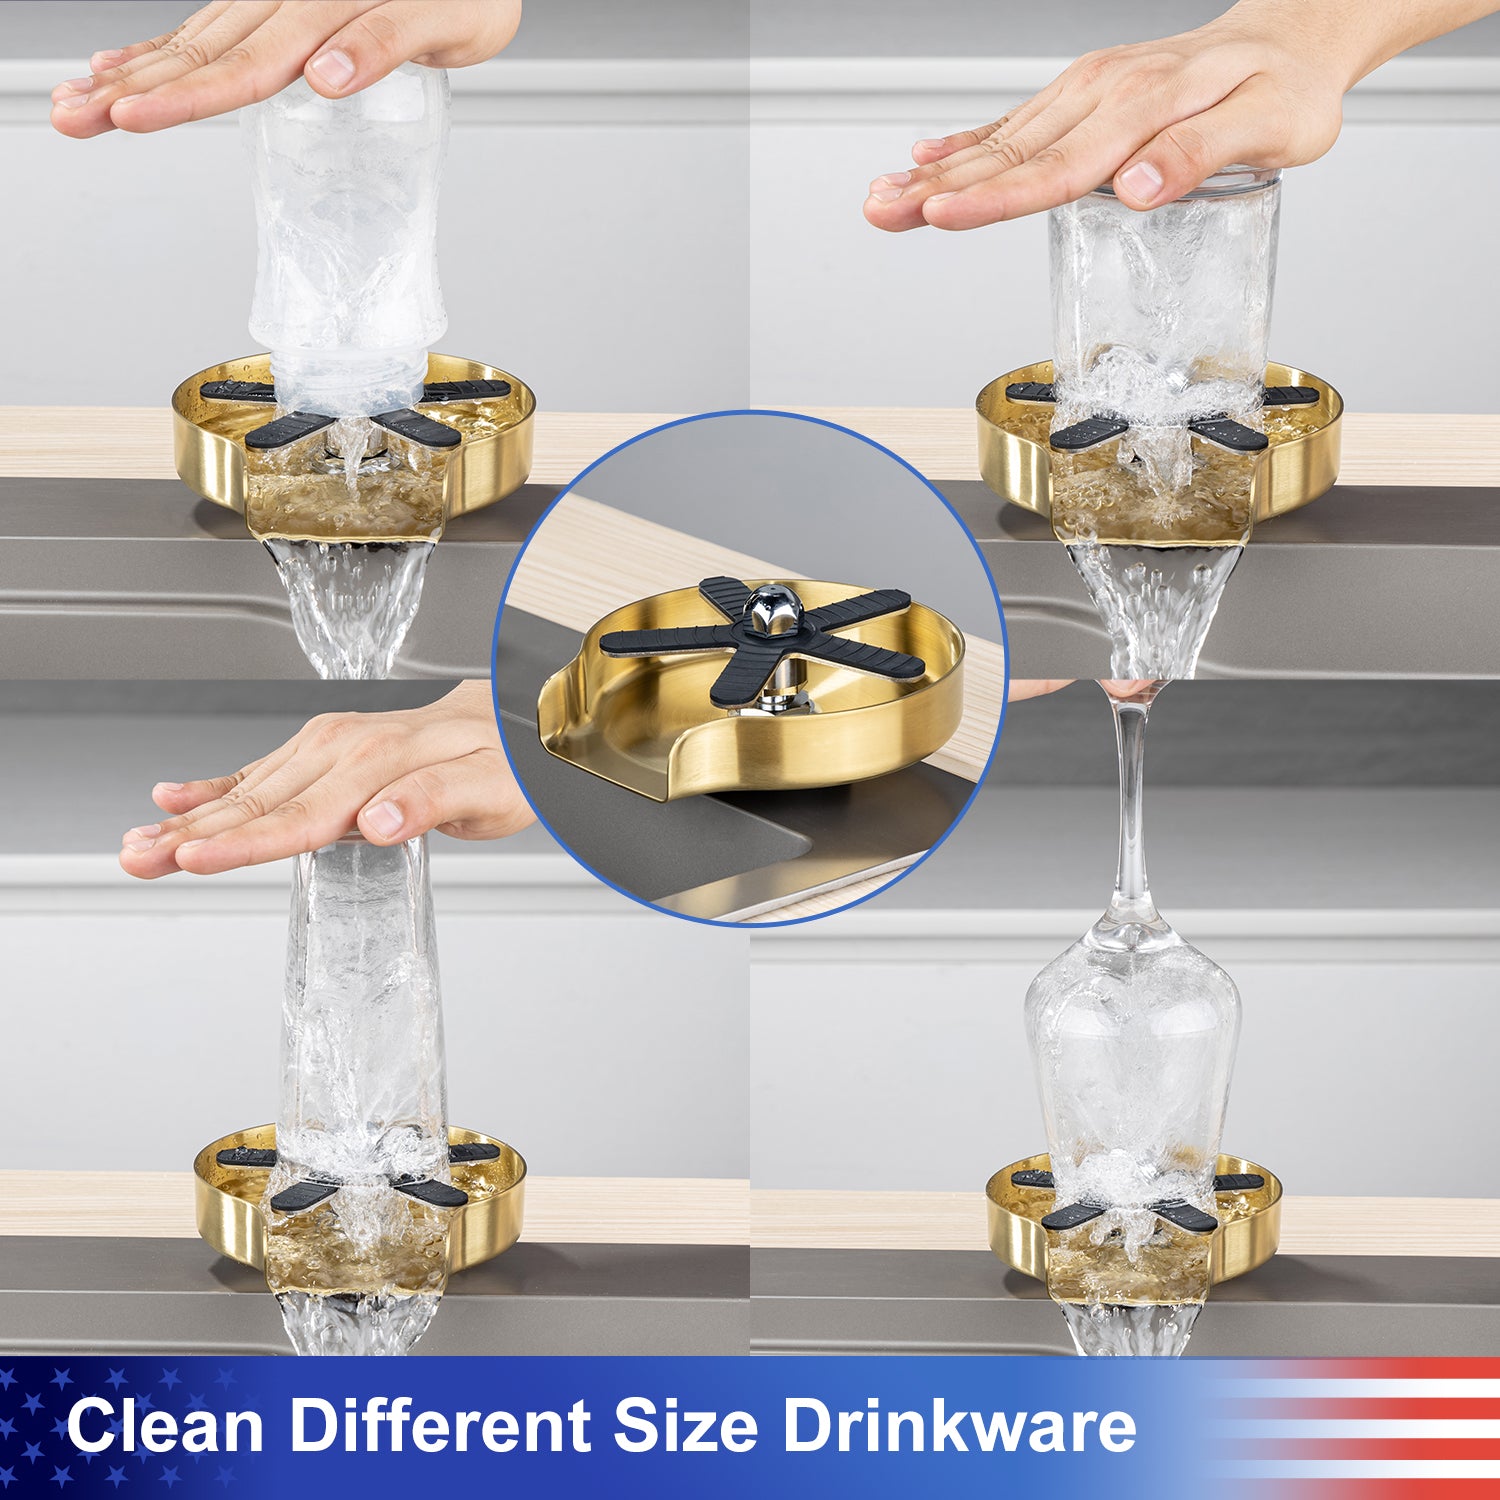 Stainless Steel Glass Rinser For Kitchen Sink, Kitchen Sink Accessories Cup Washer RX1237